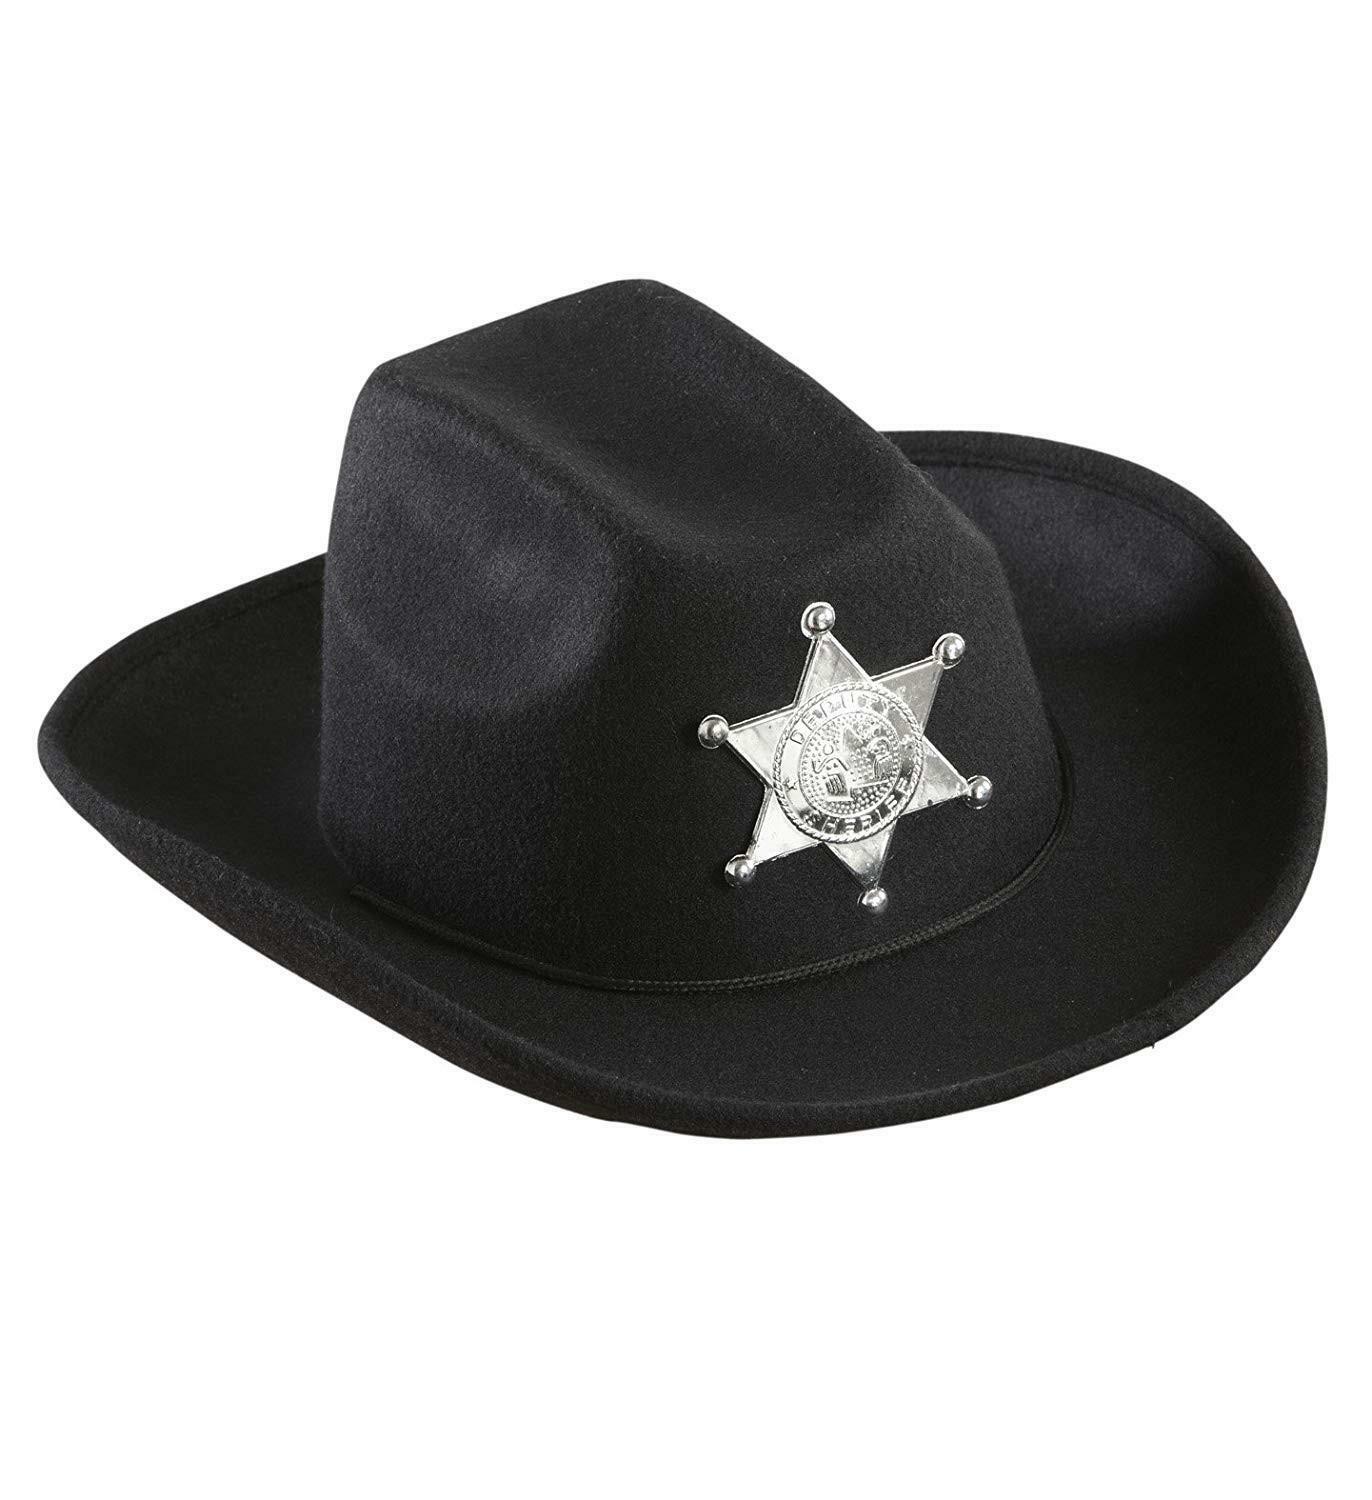 widmann cappello cowboy feltro nero